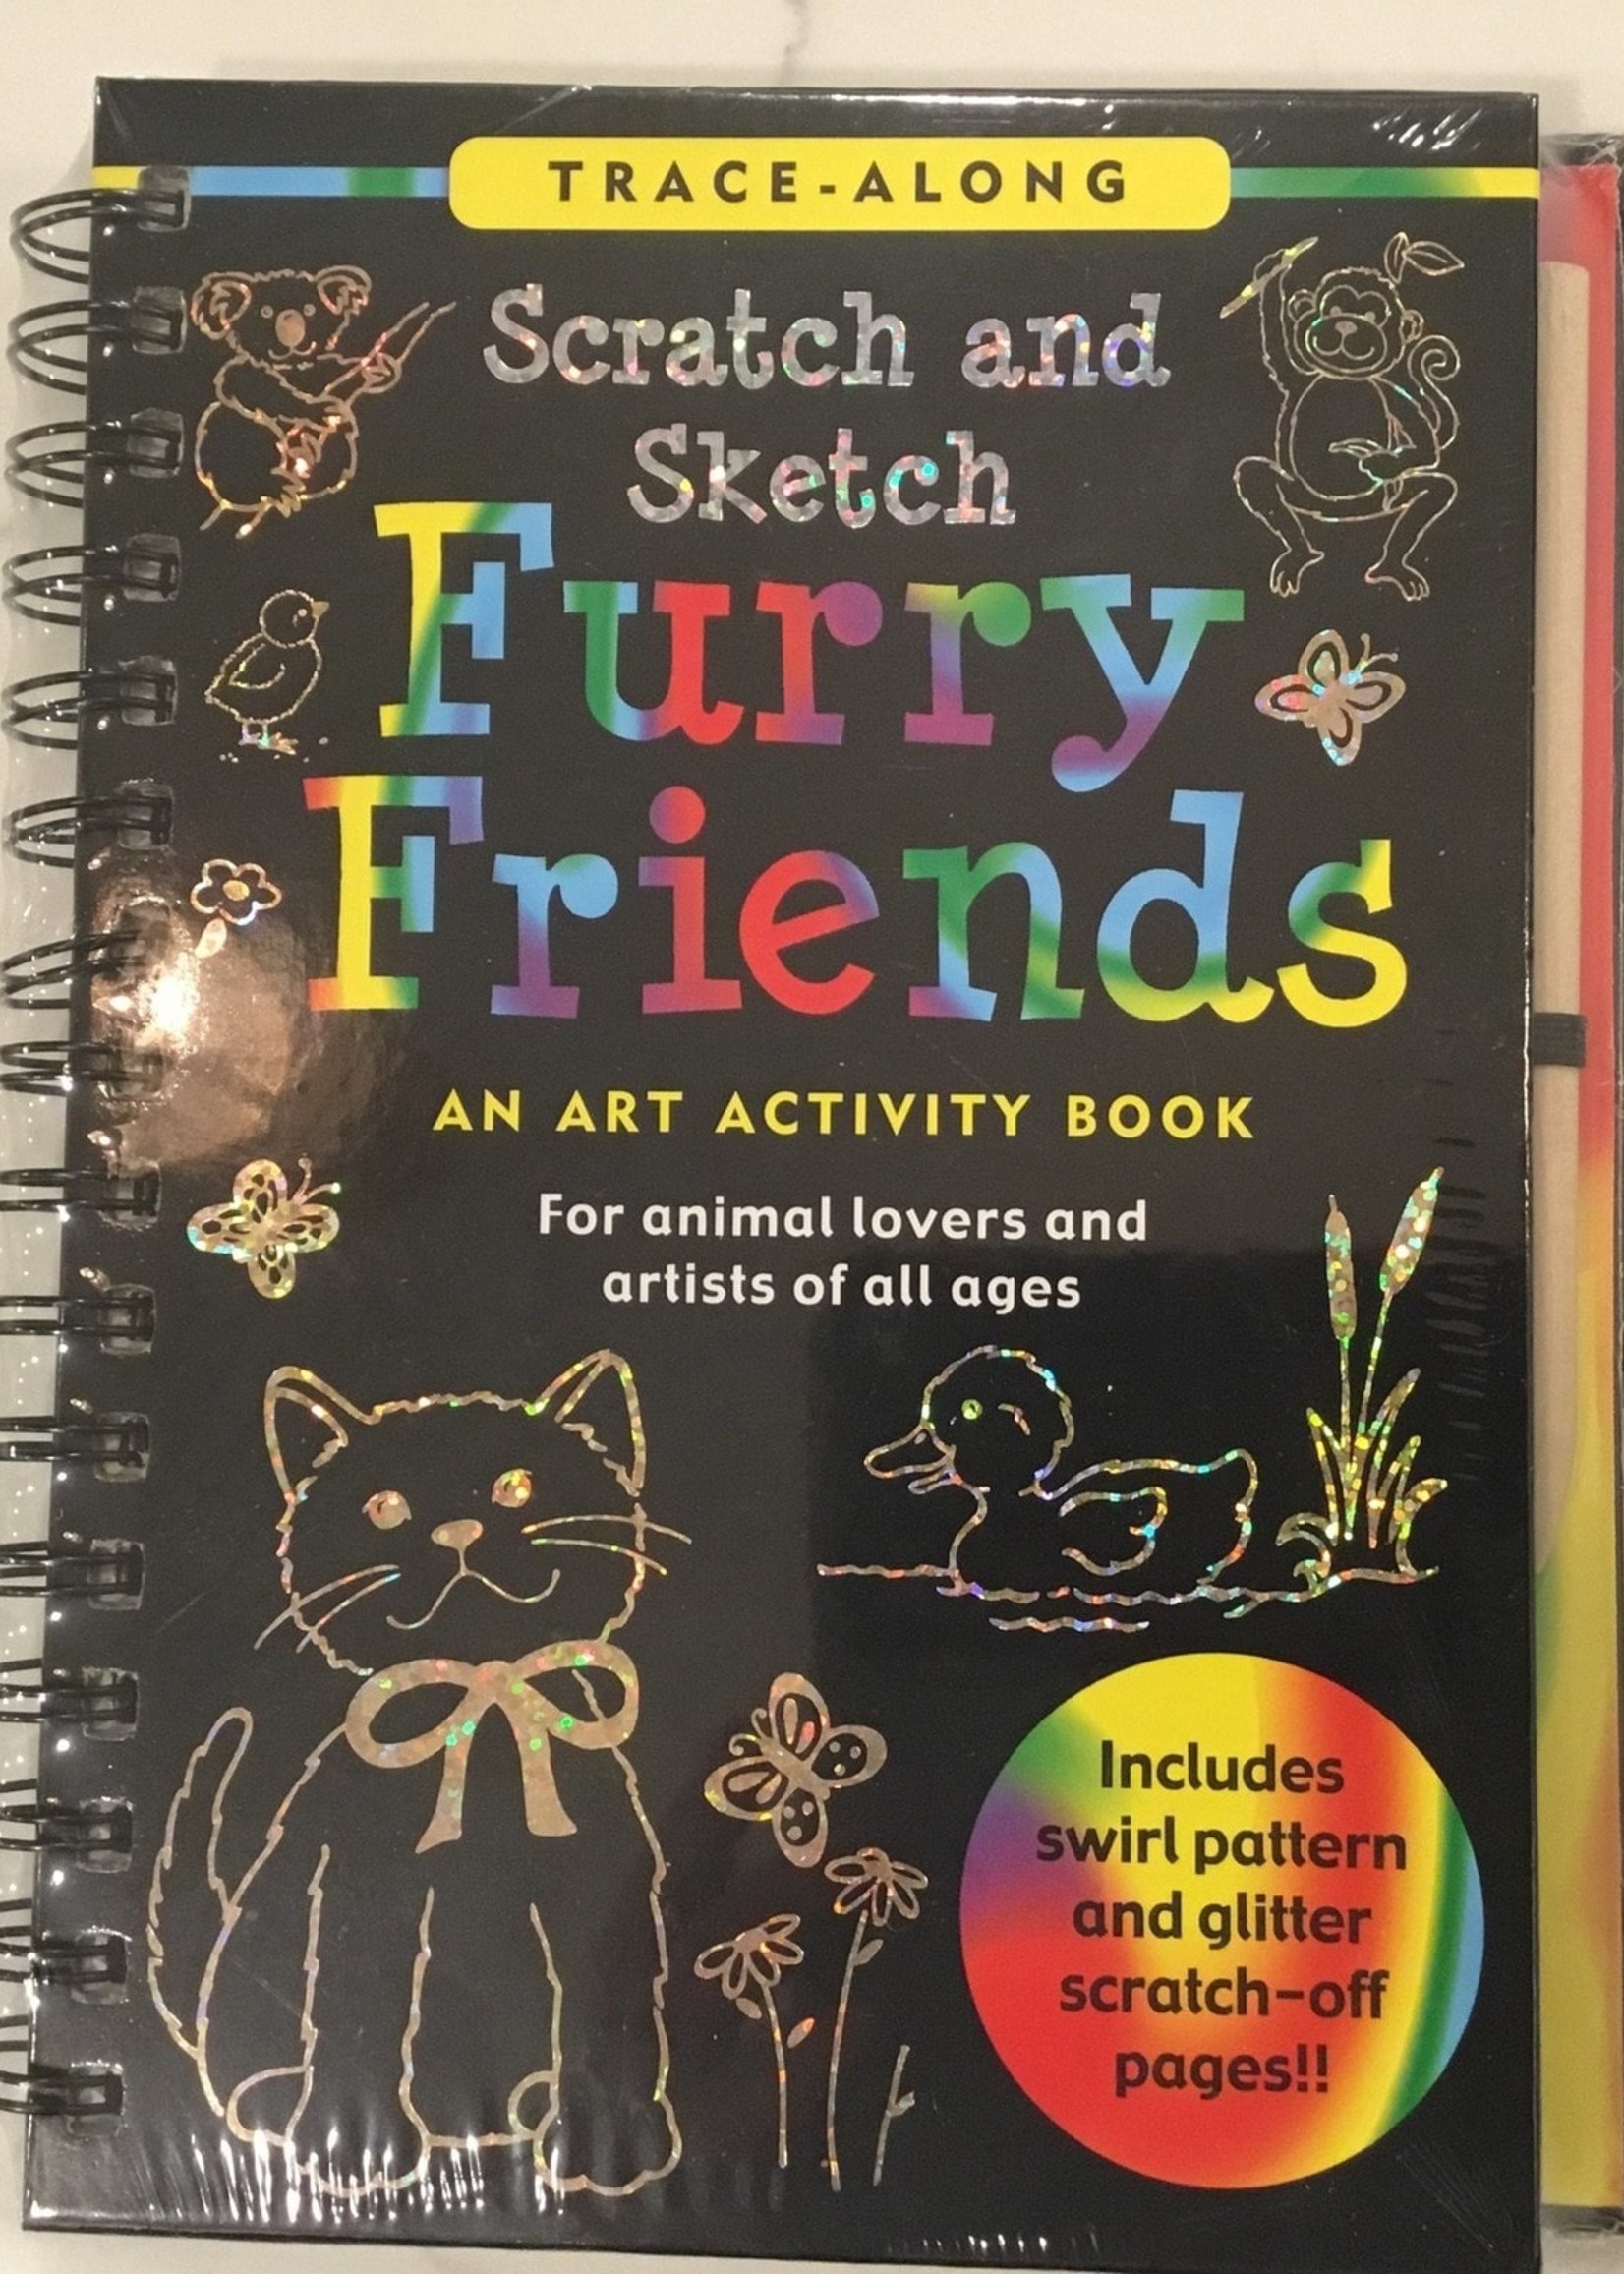 Scratch and Sketch: Furry Friends Activity Book